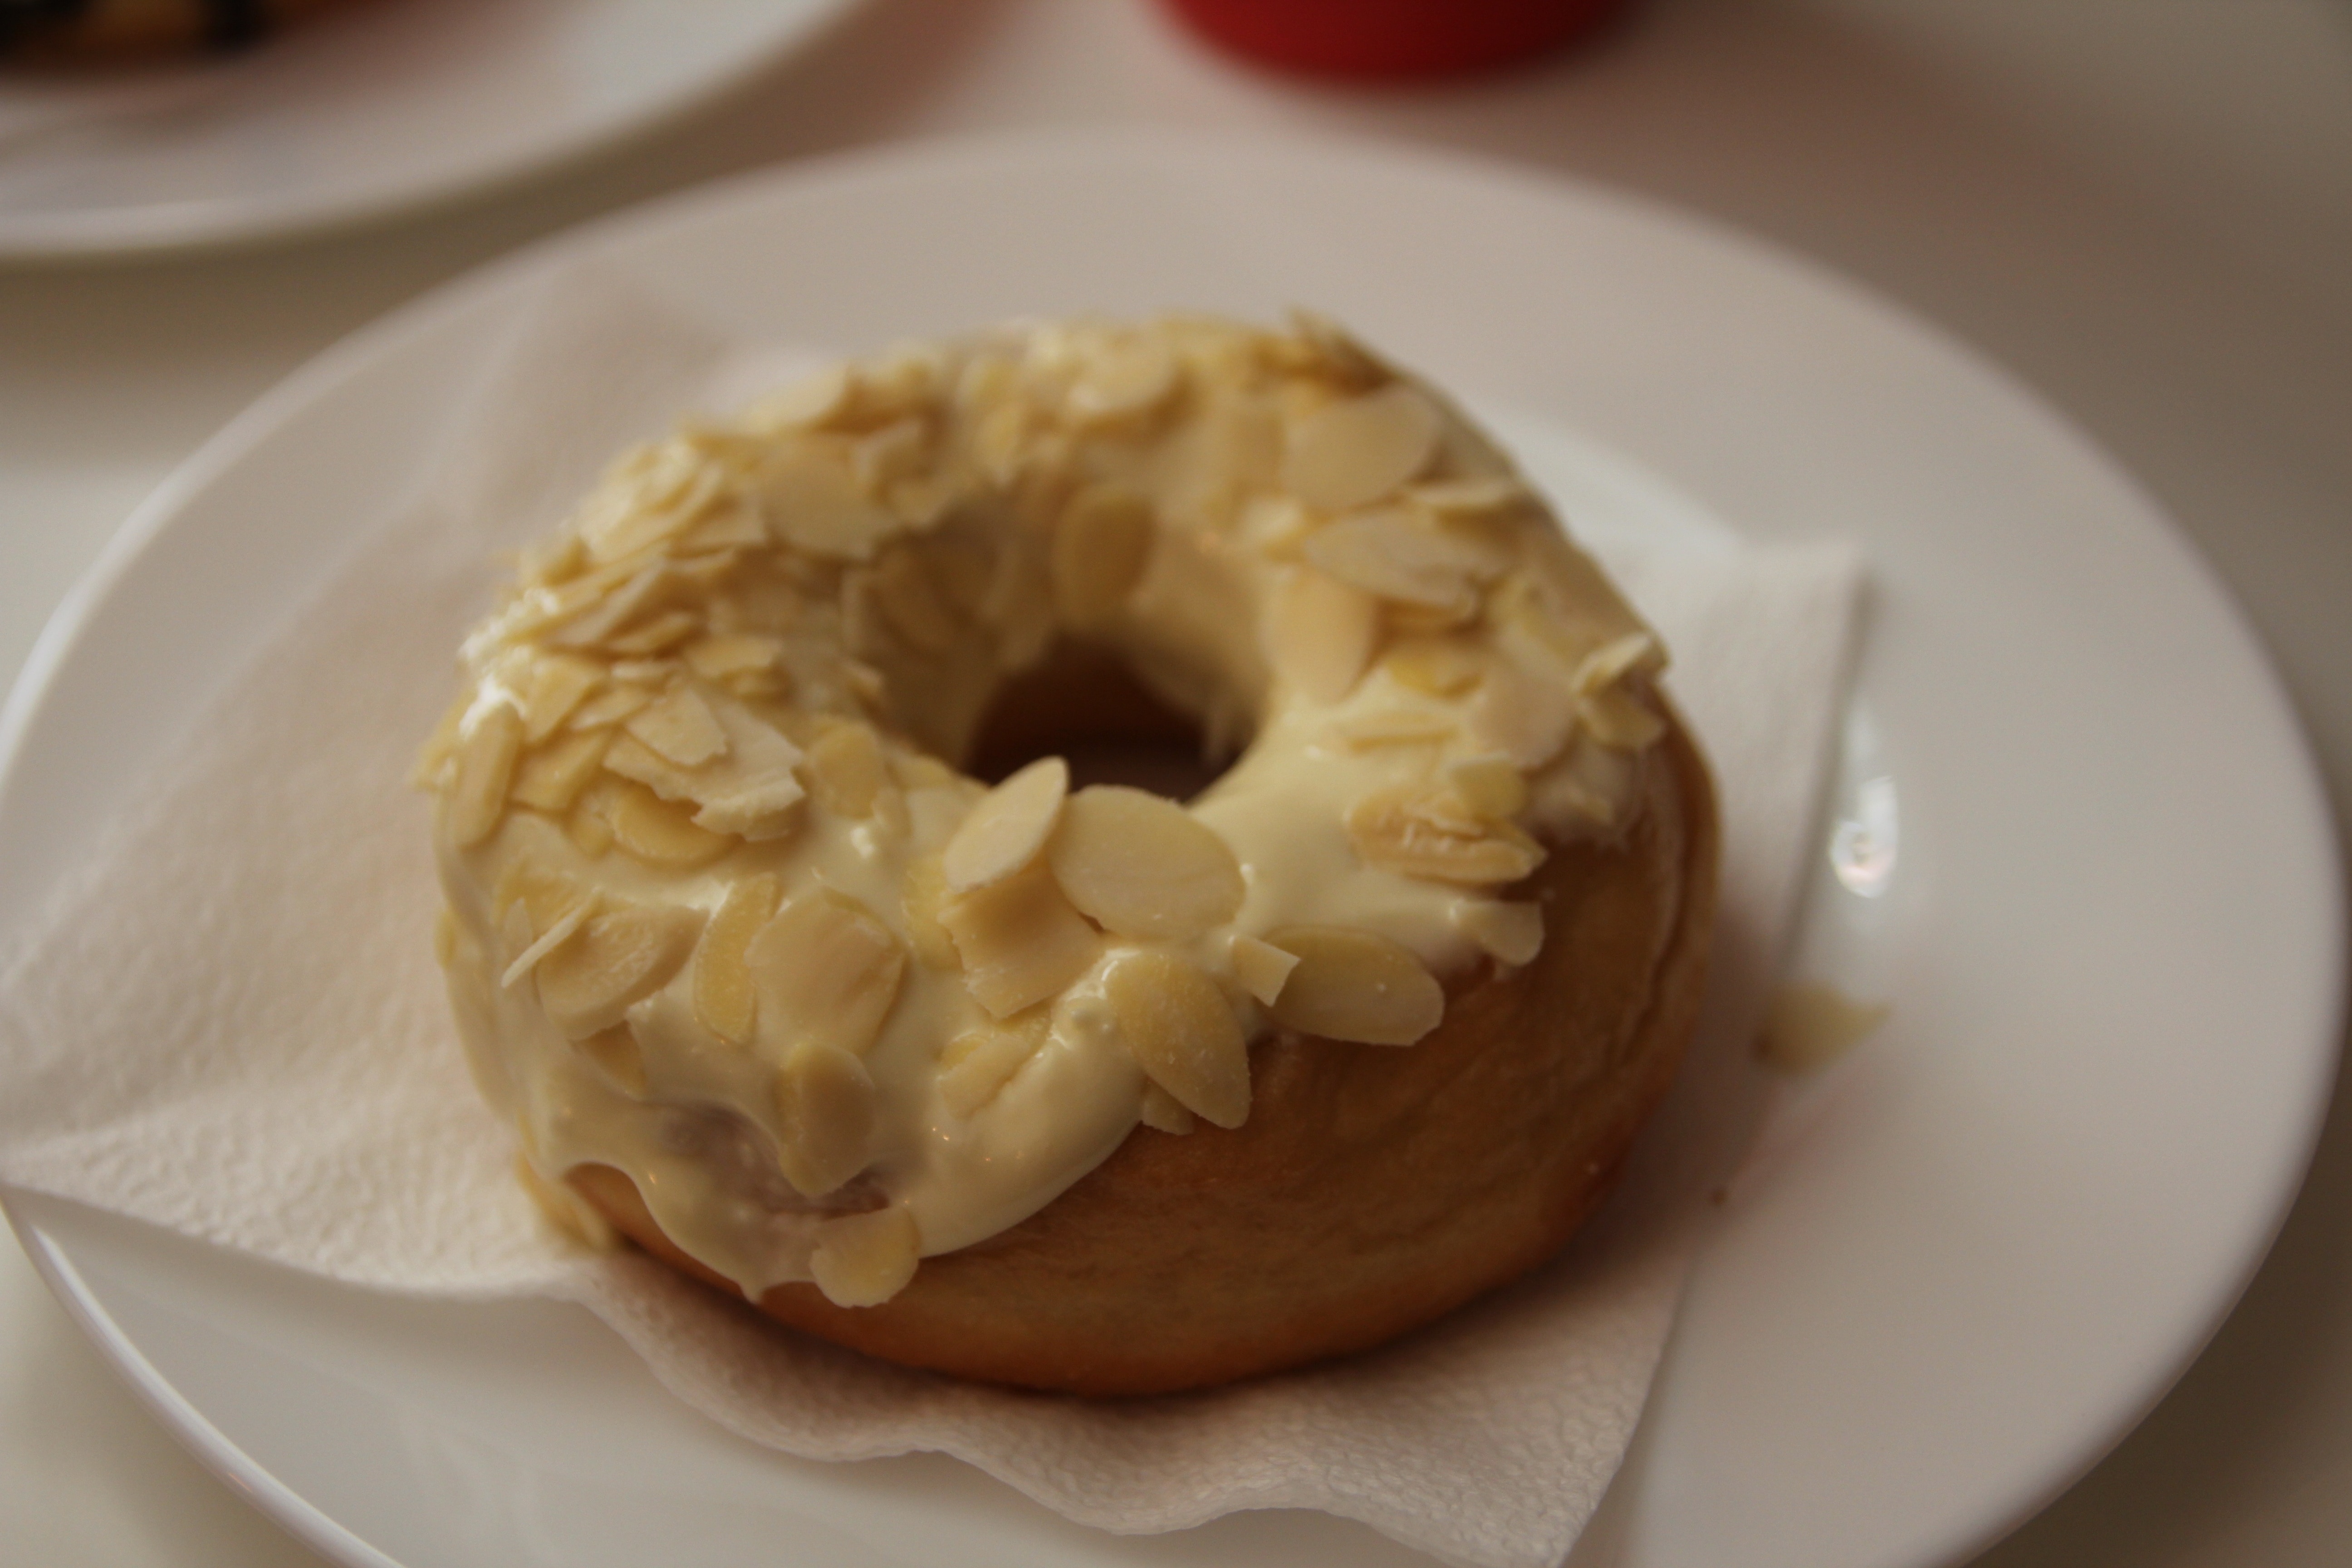 doughnut with cream on top